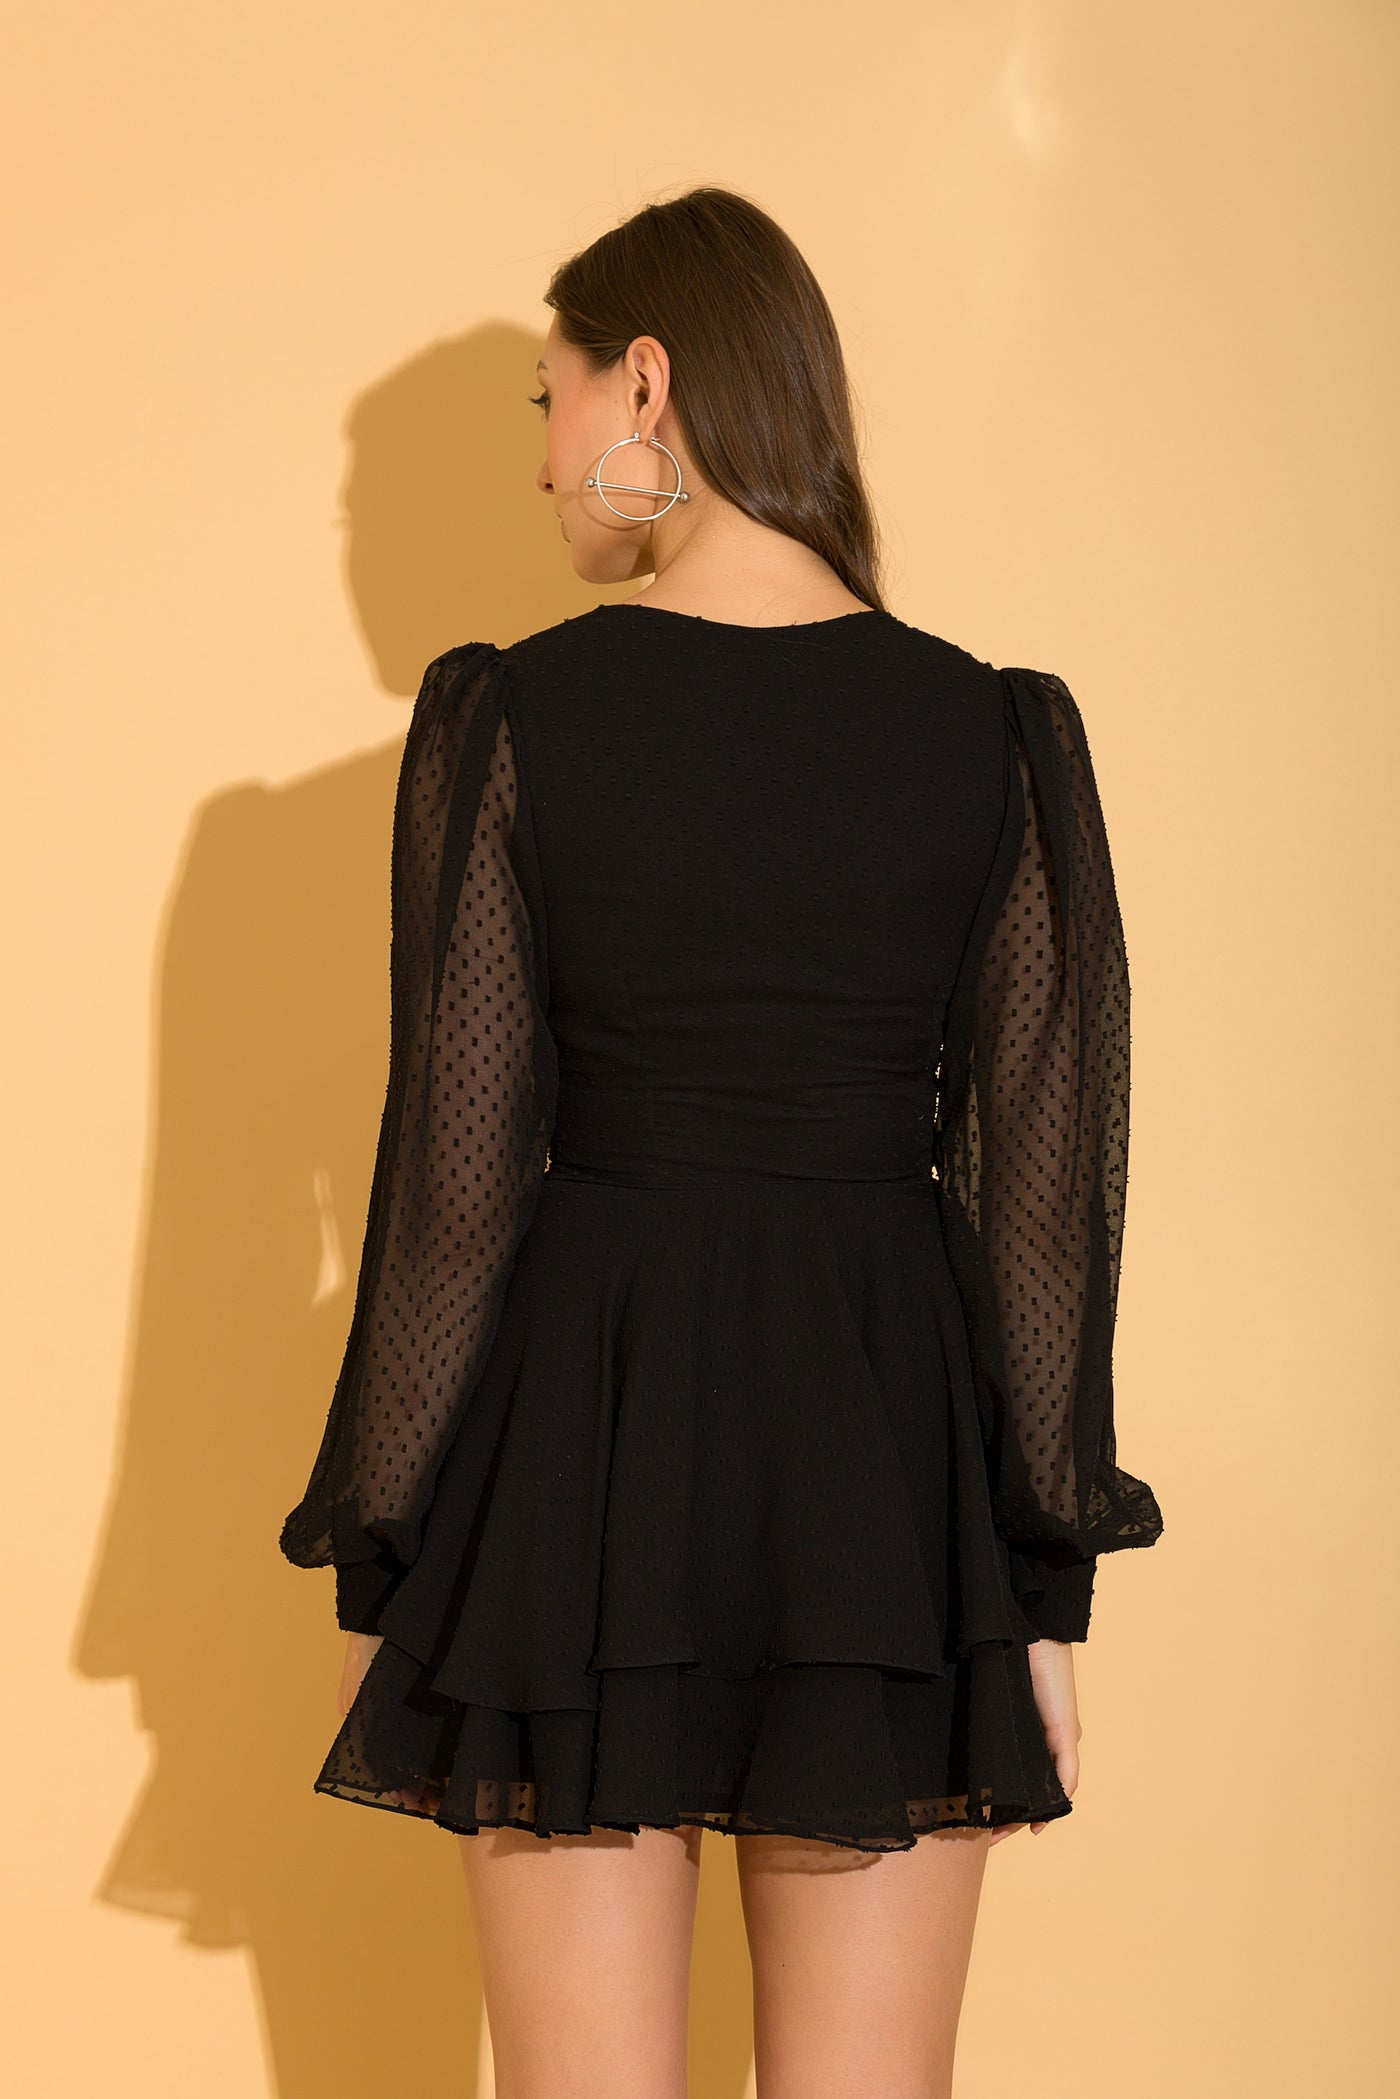 Black Swiss Dot Ruffle Dress